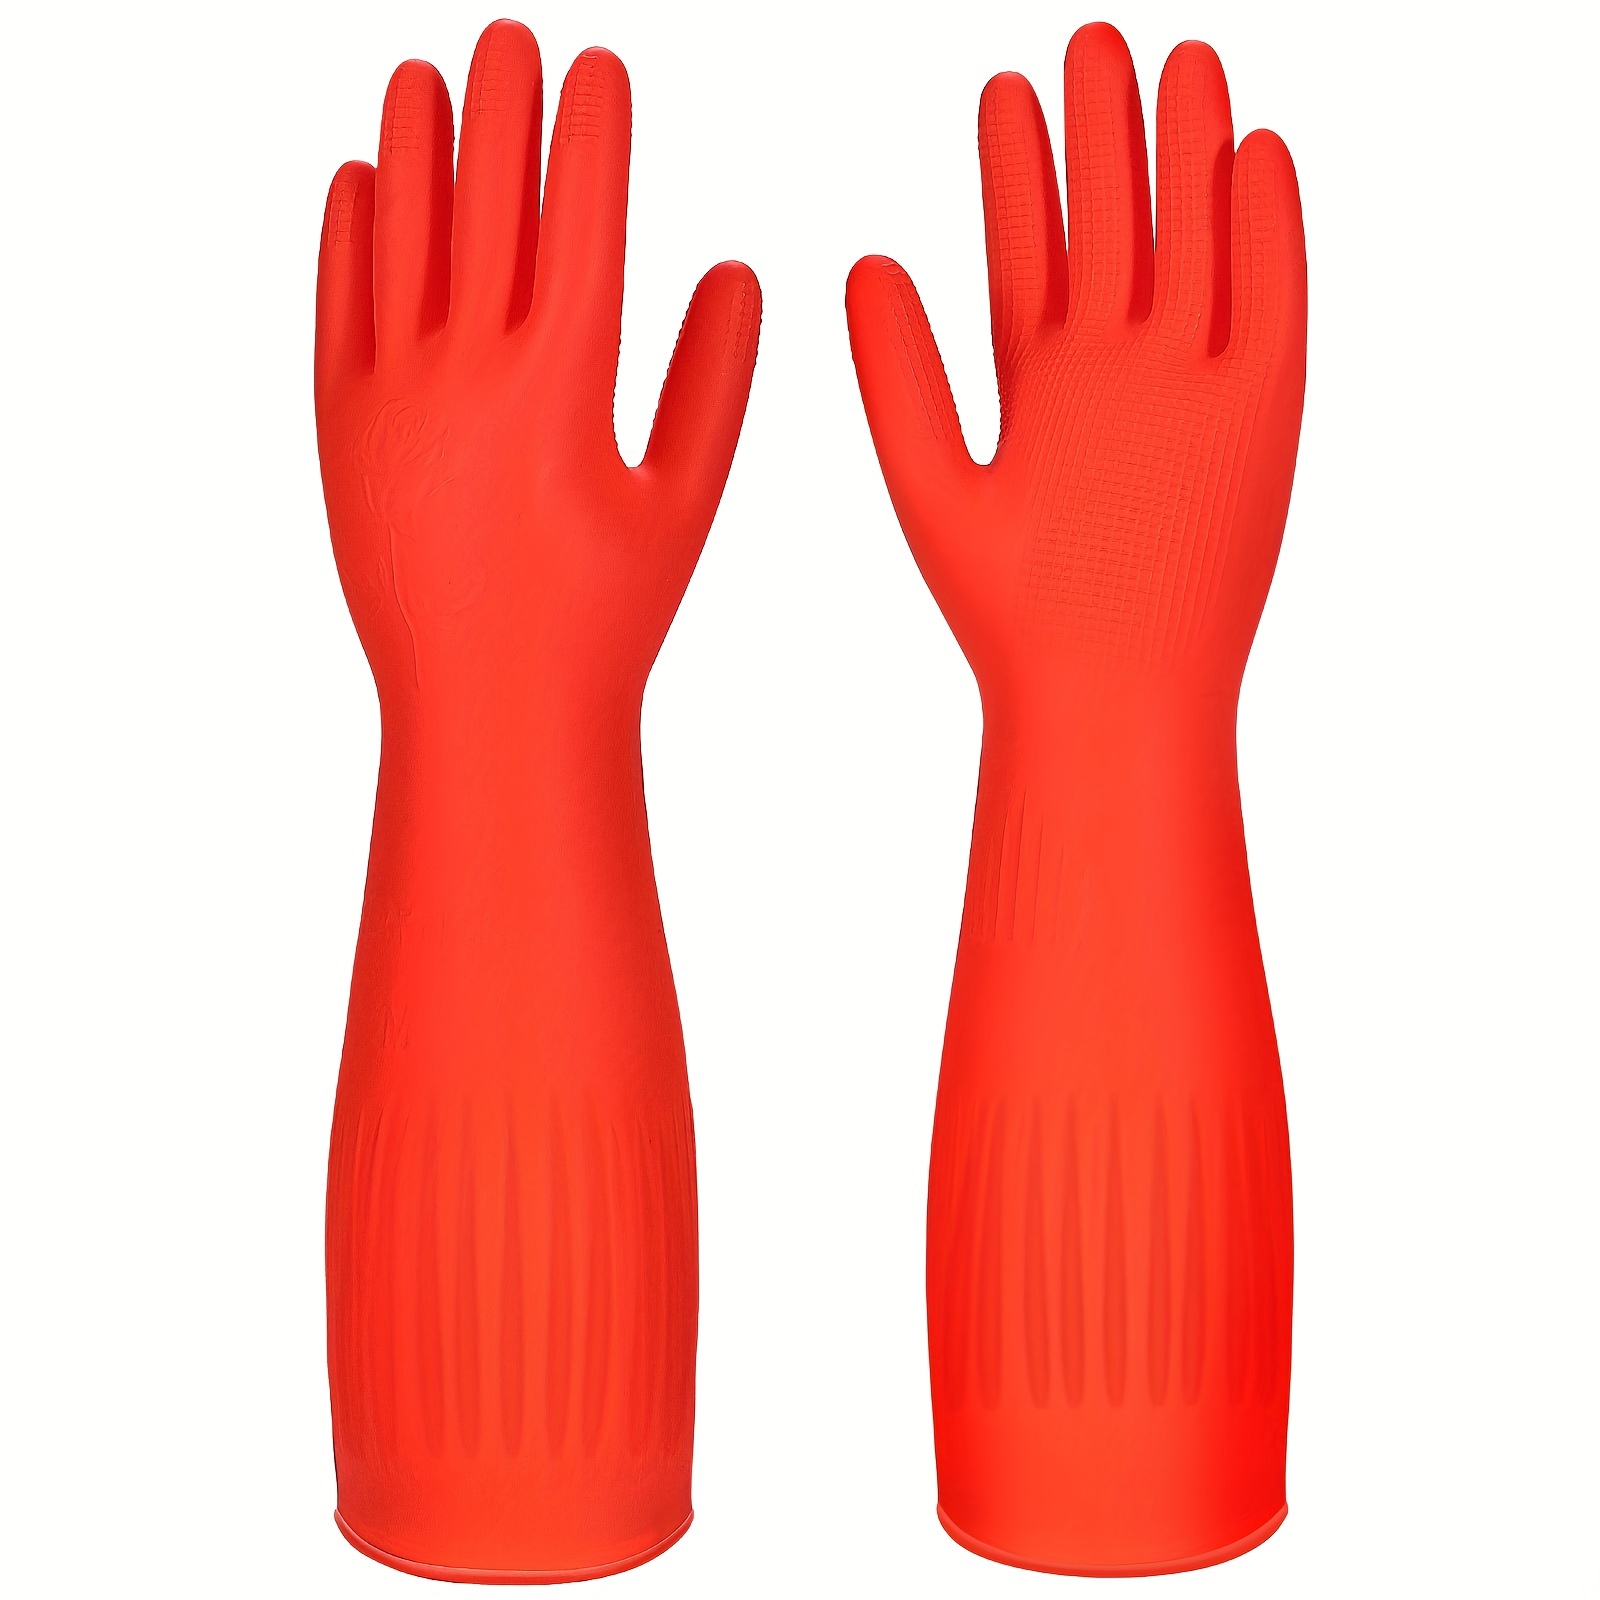 Paquete de 3 guantes de limpieza reutilizables sin látex, guantes para  lavar platos con forro de algodón y palma en relieve, guantes impermeables  para